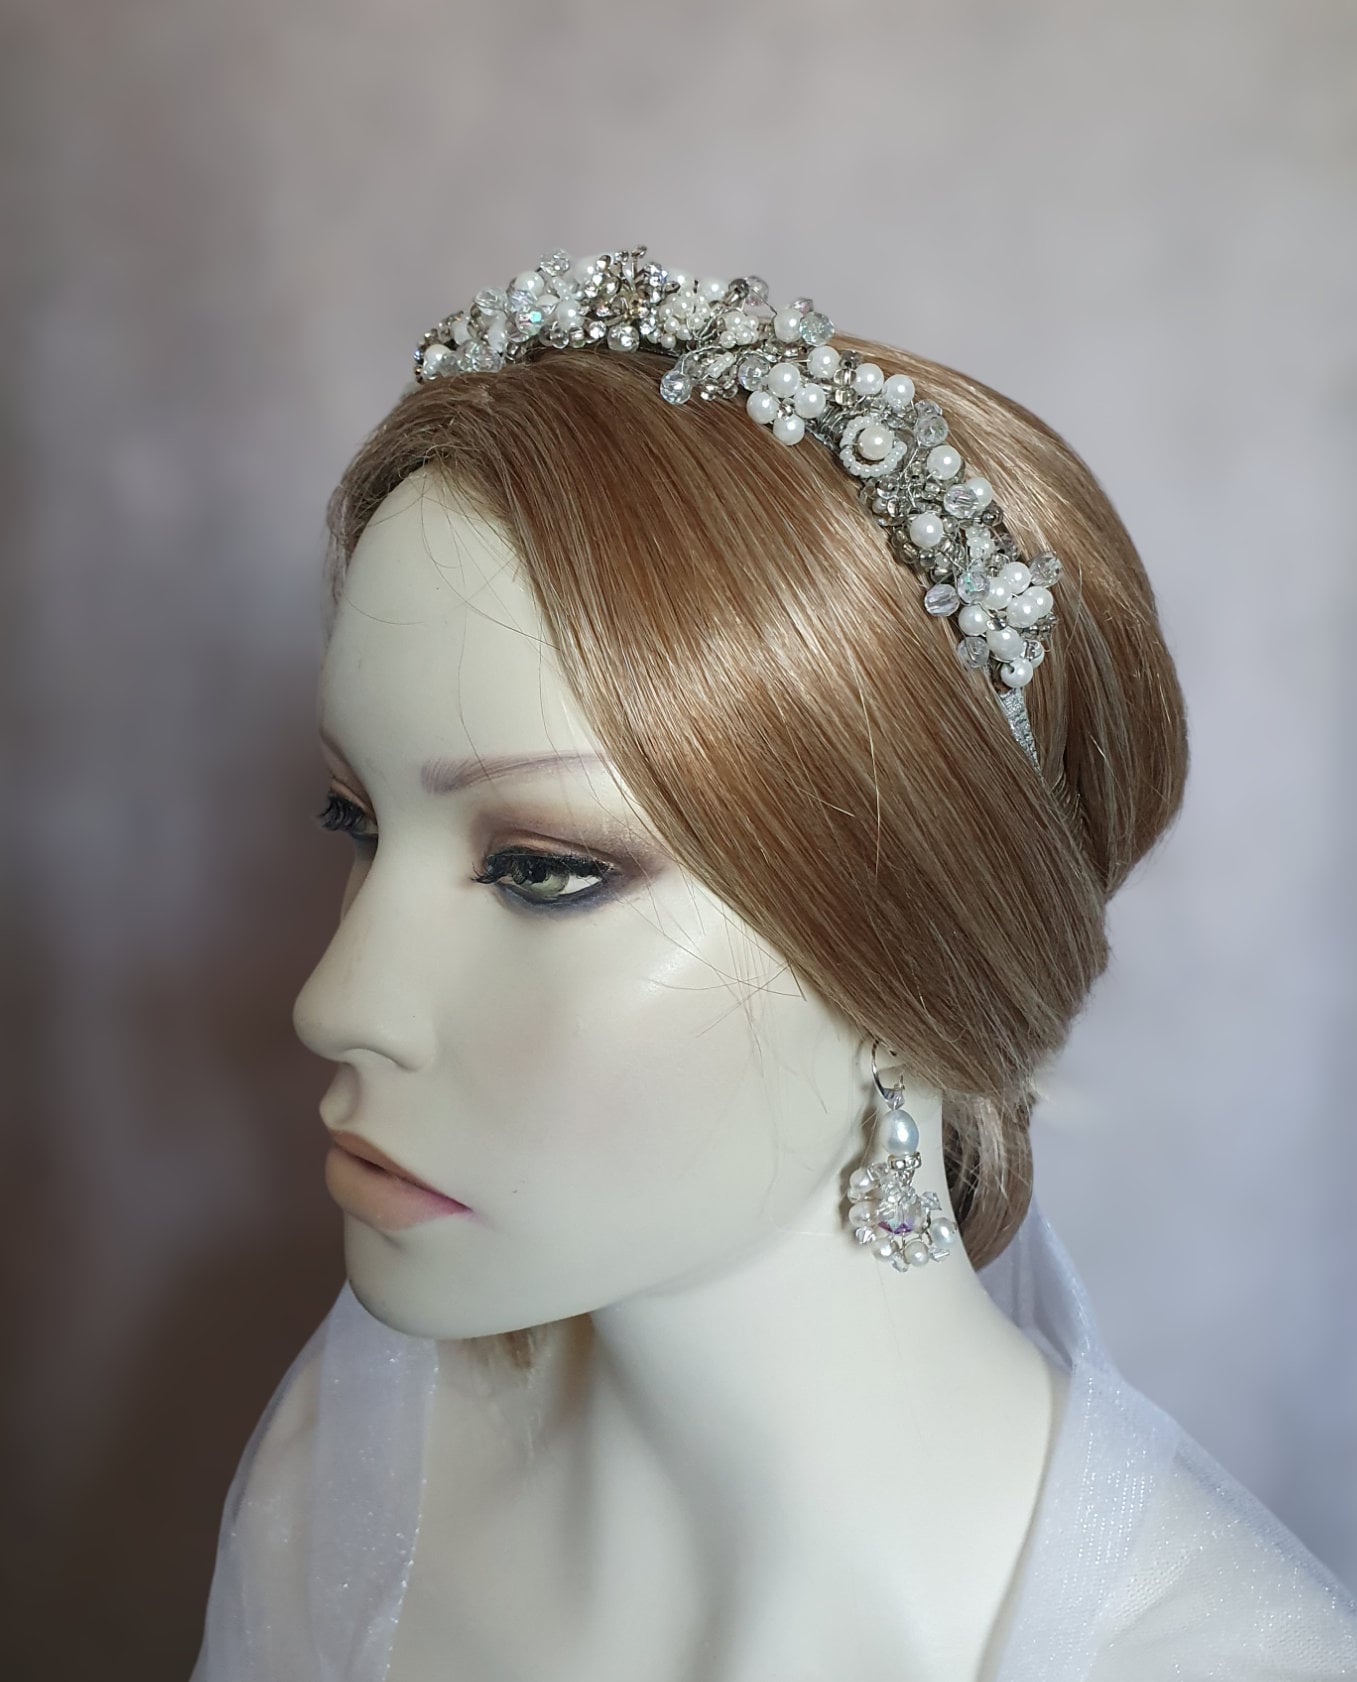 Bruiloft tiara met kristallen stenen en parels, handgemaakt, bruids tiara, bruids diaeem, bruids tiara, dames tiara, speciale gelegenheid